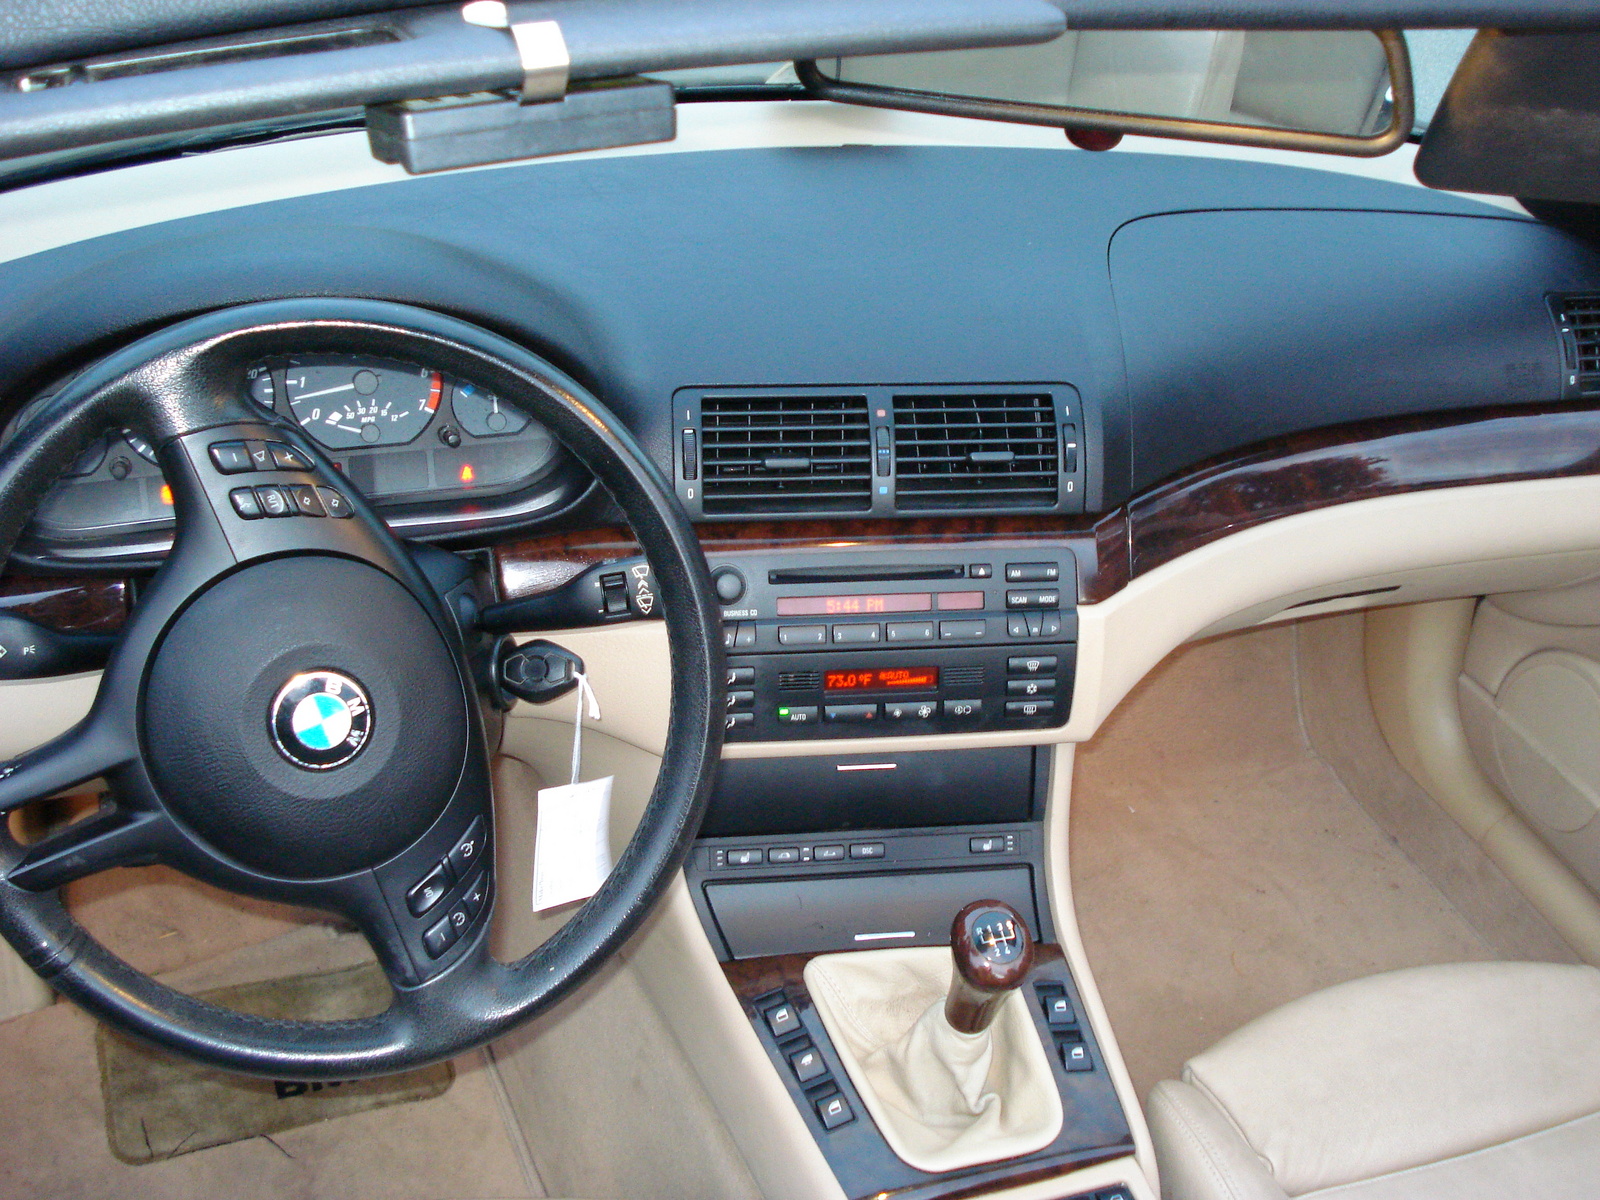 2002 Bmw 325ci interior #3